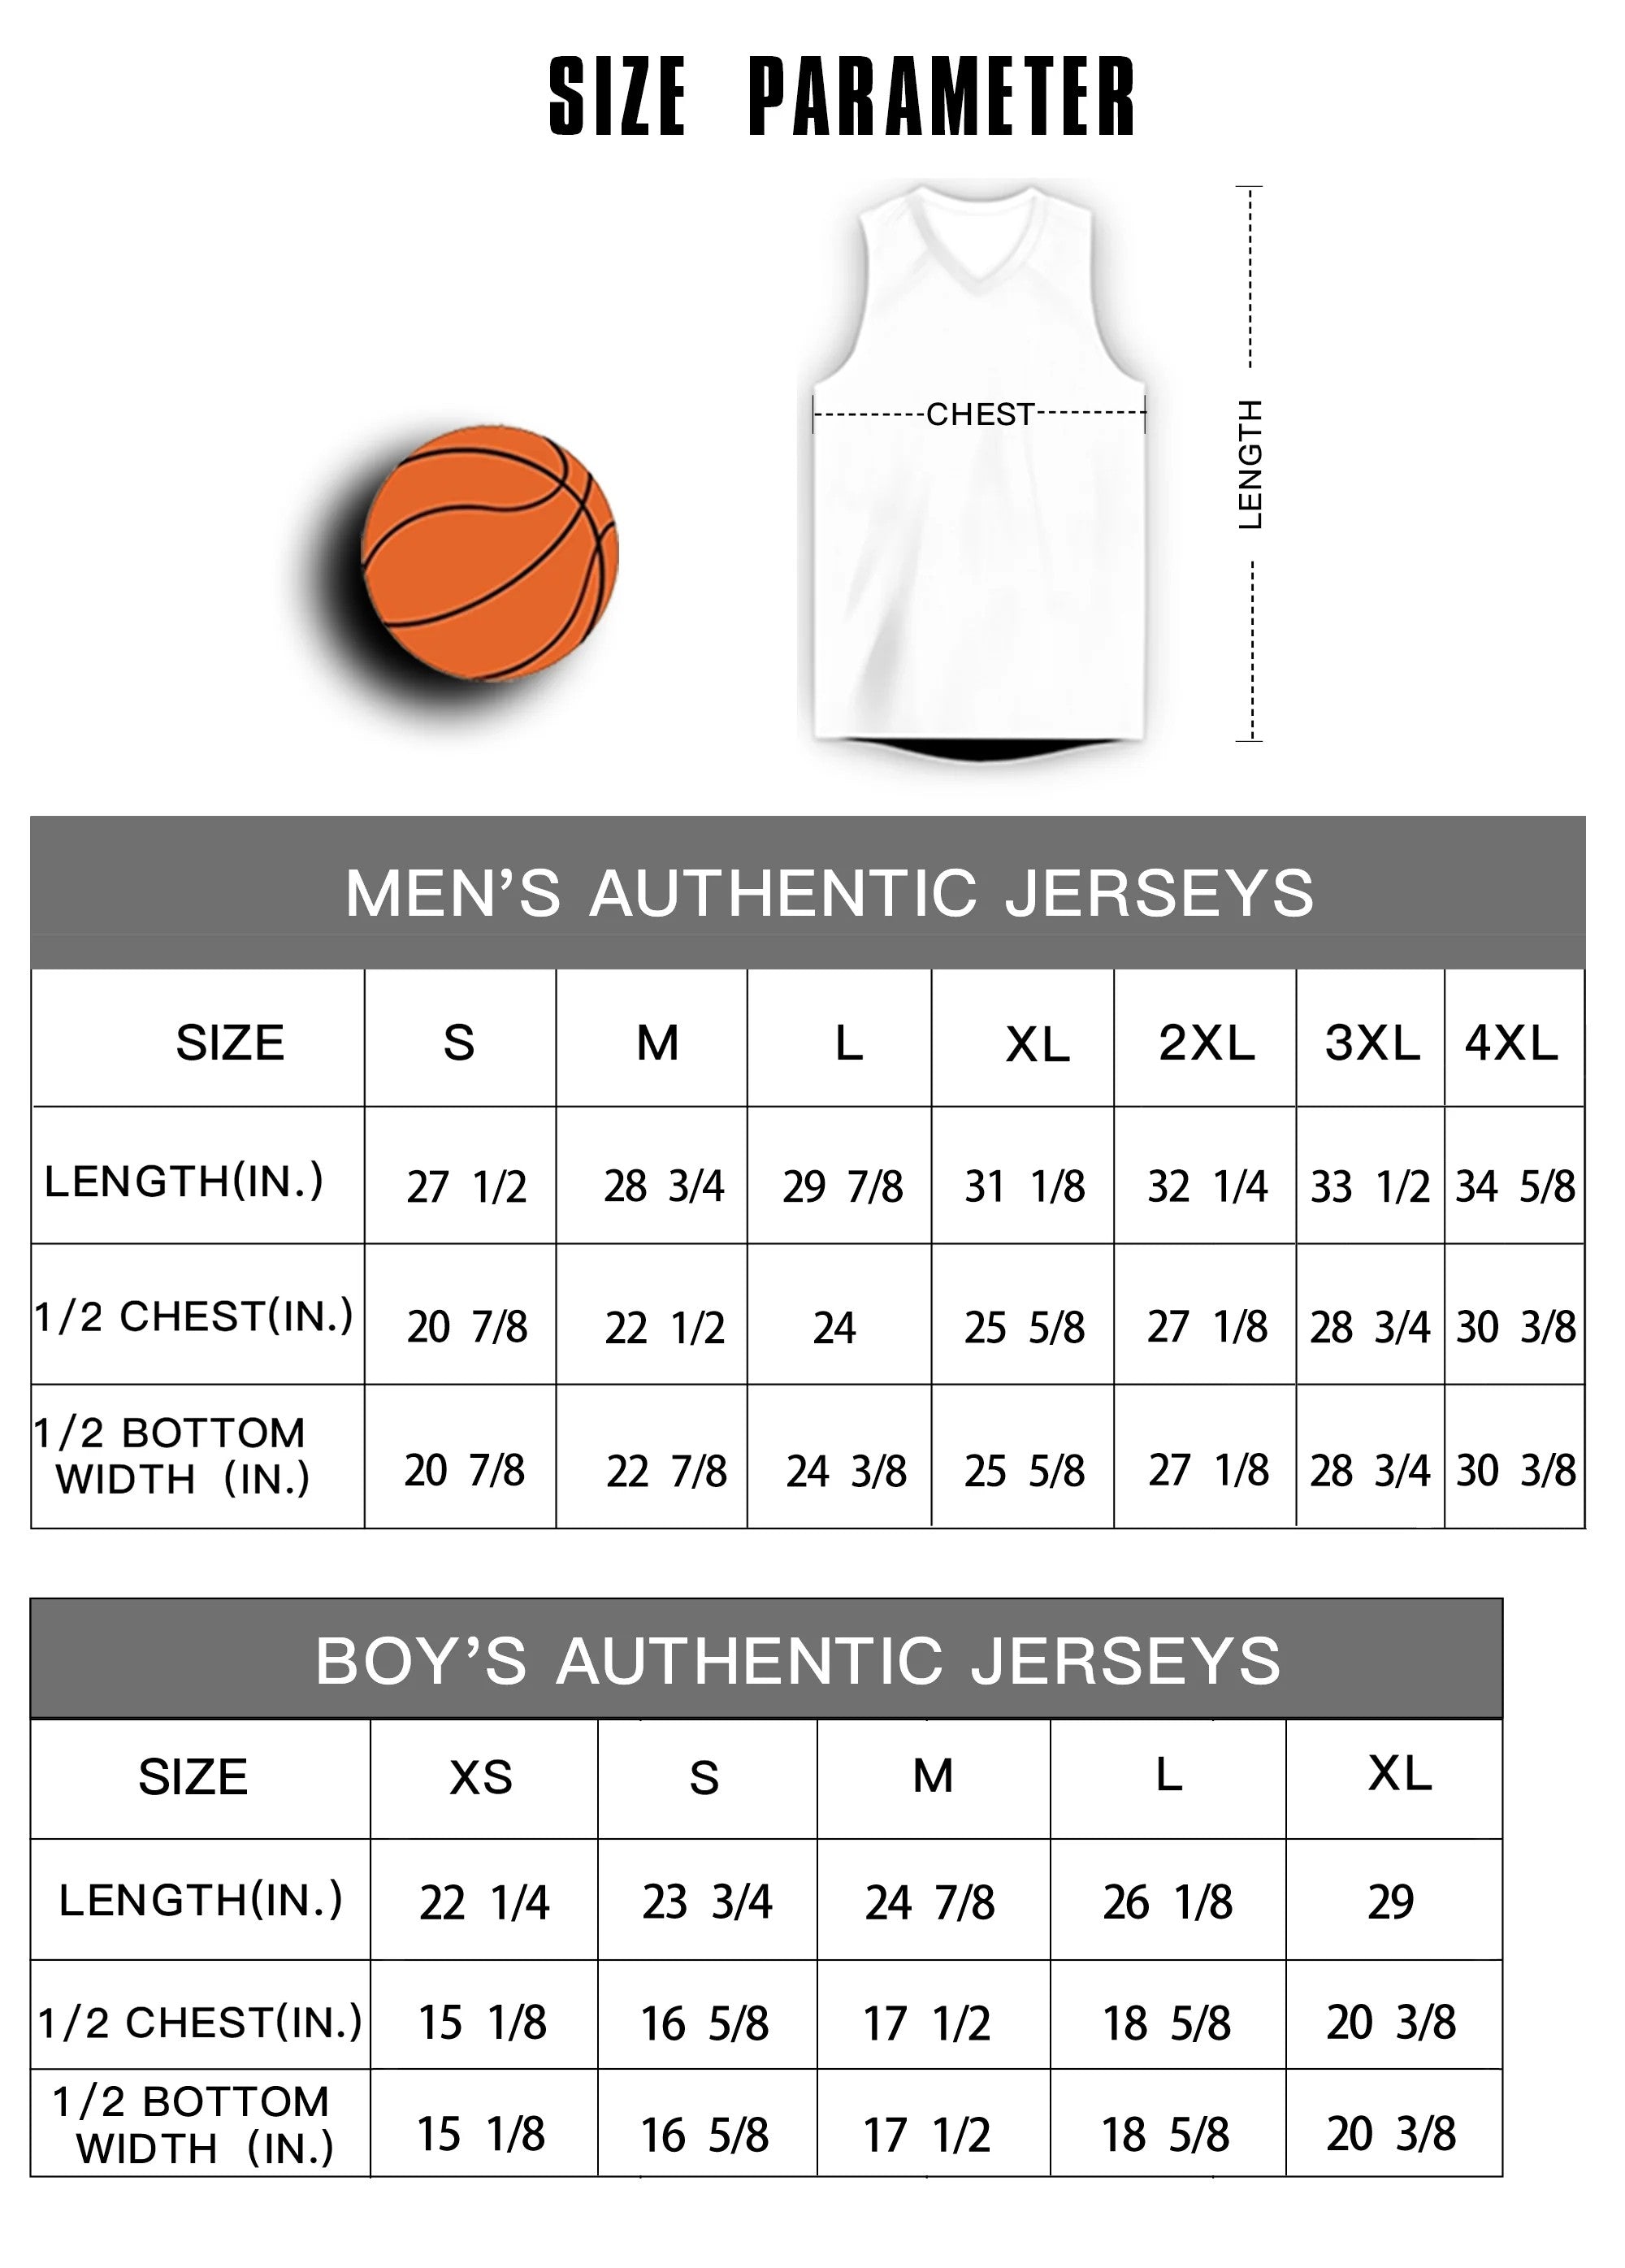 Custom Orange Basketball Jersey - Jersey One